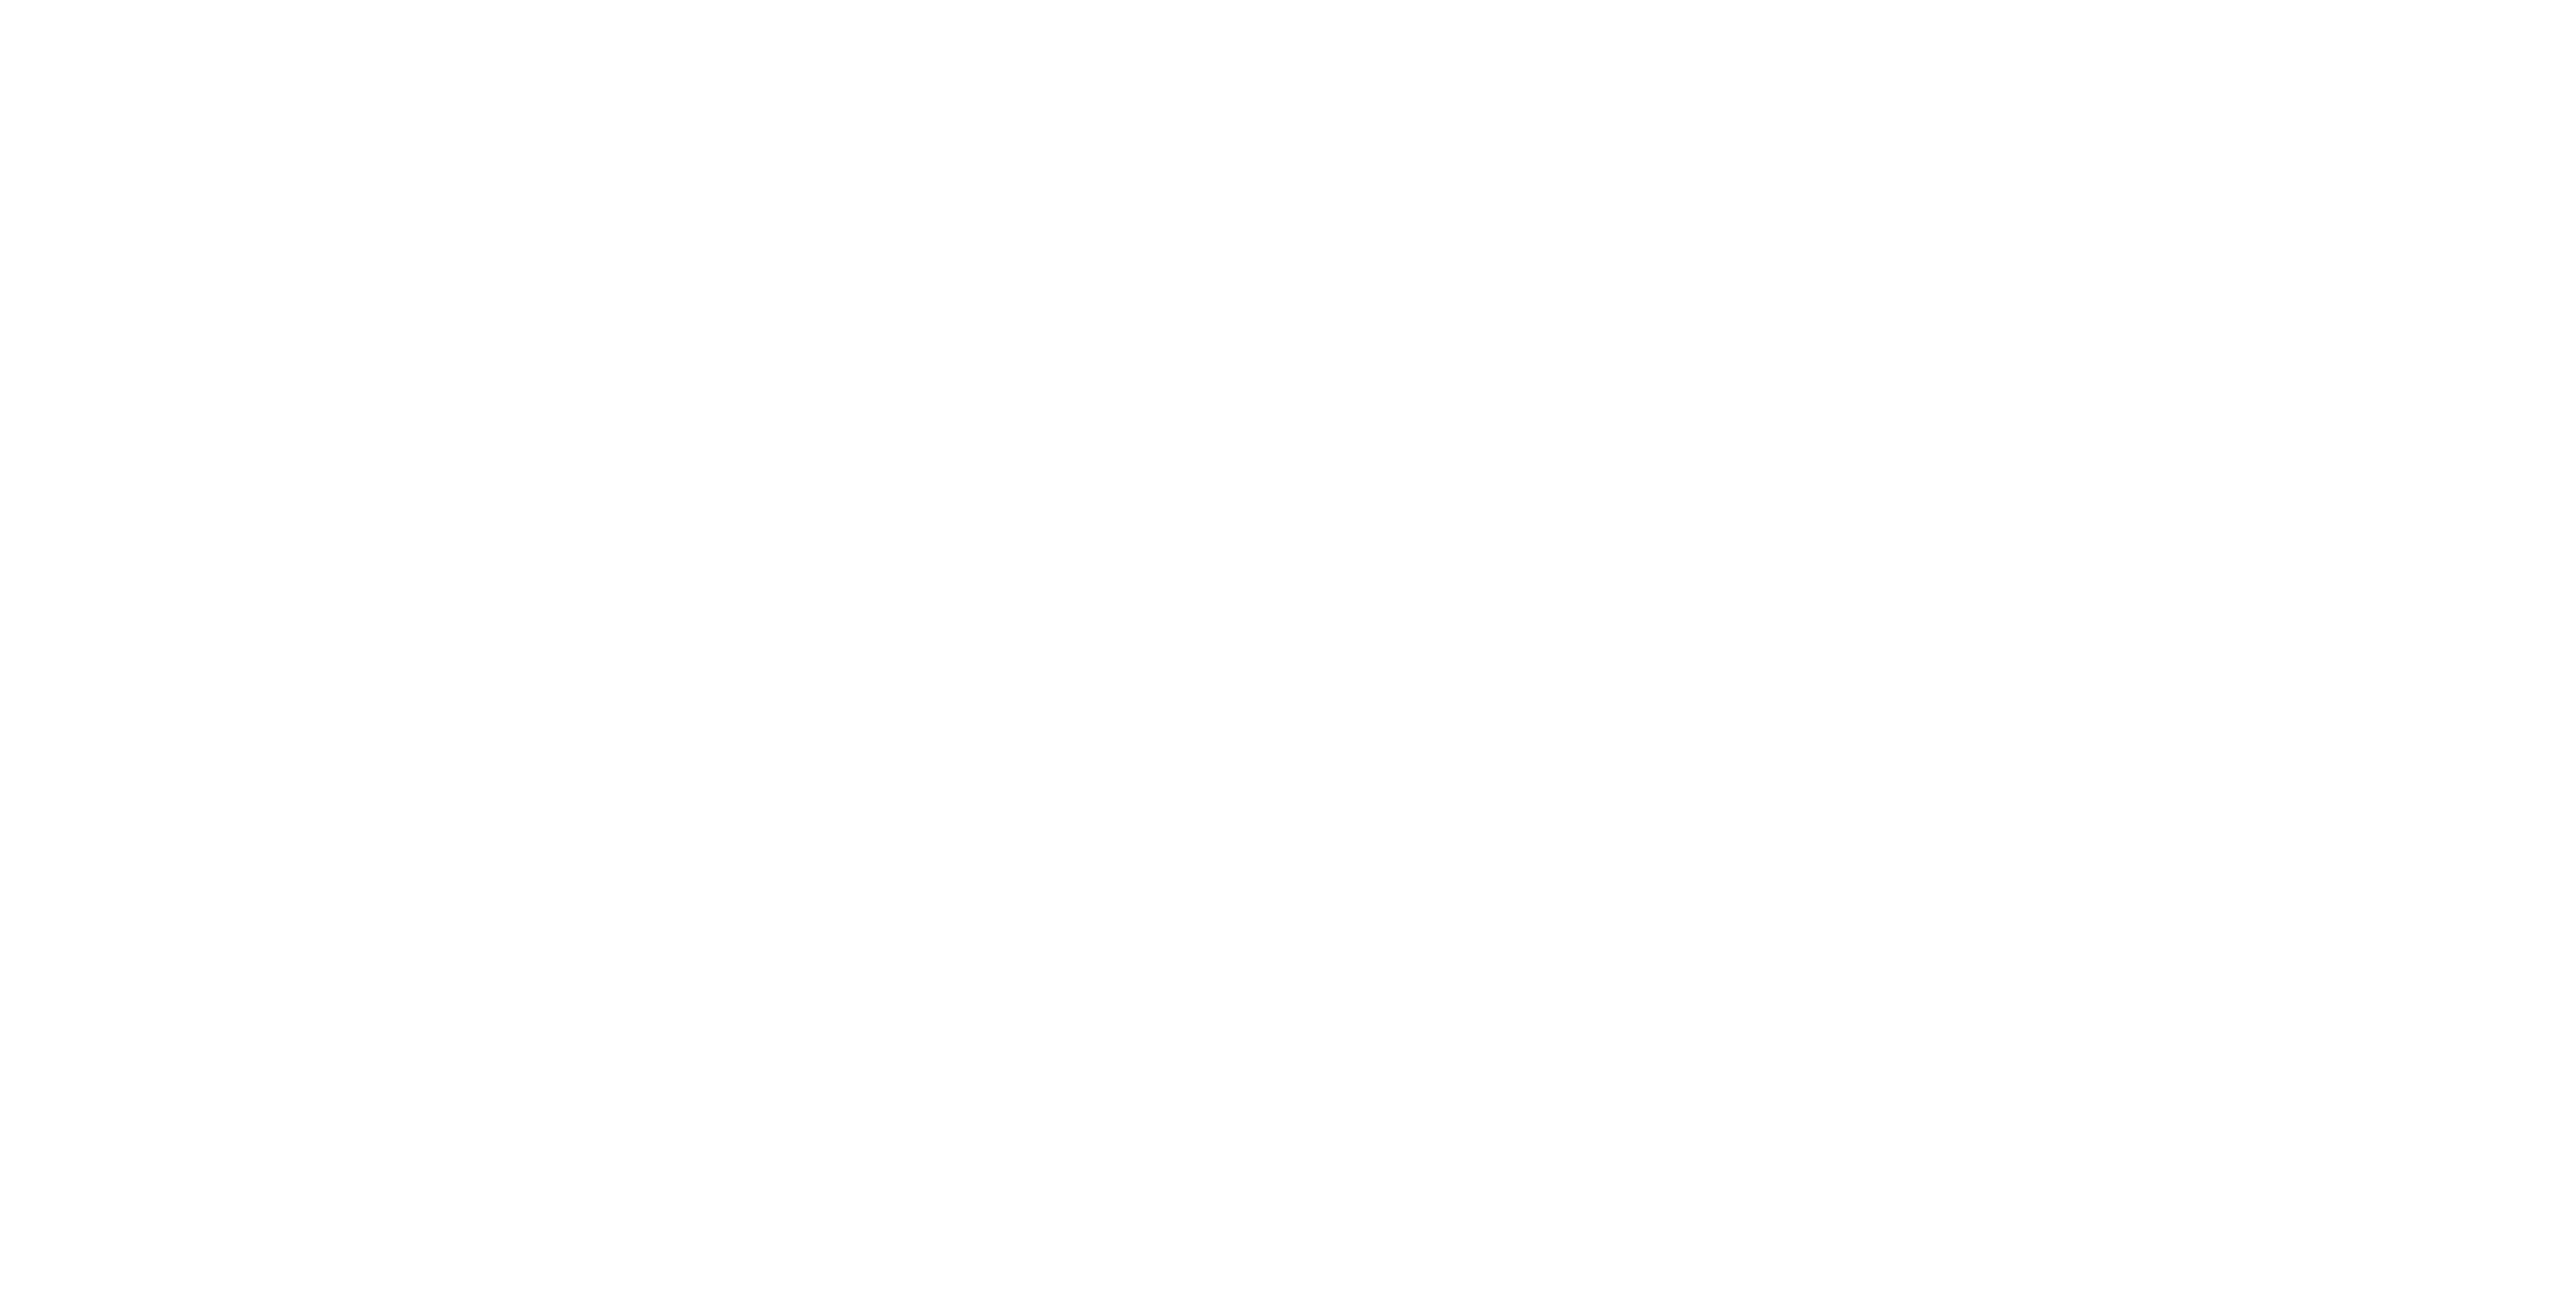 r390-starry-patternn.png